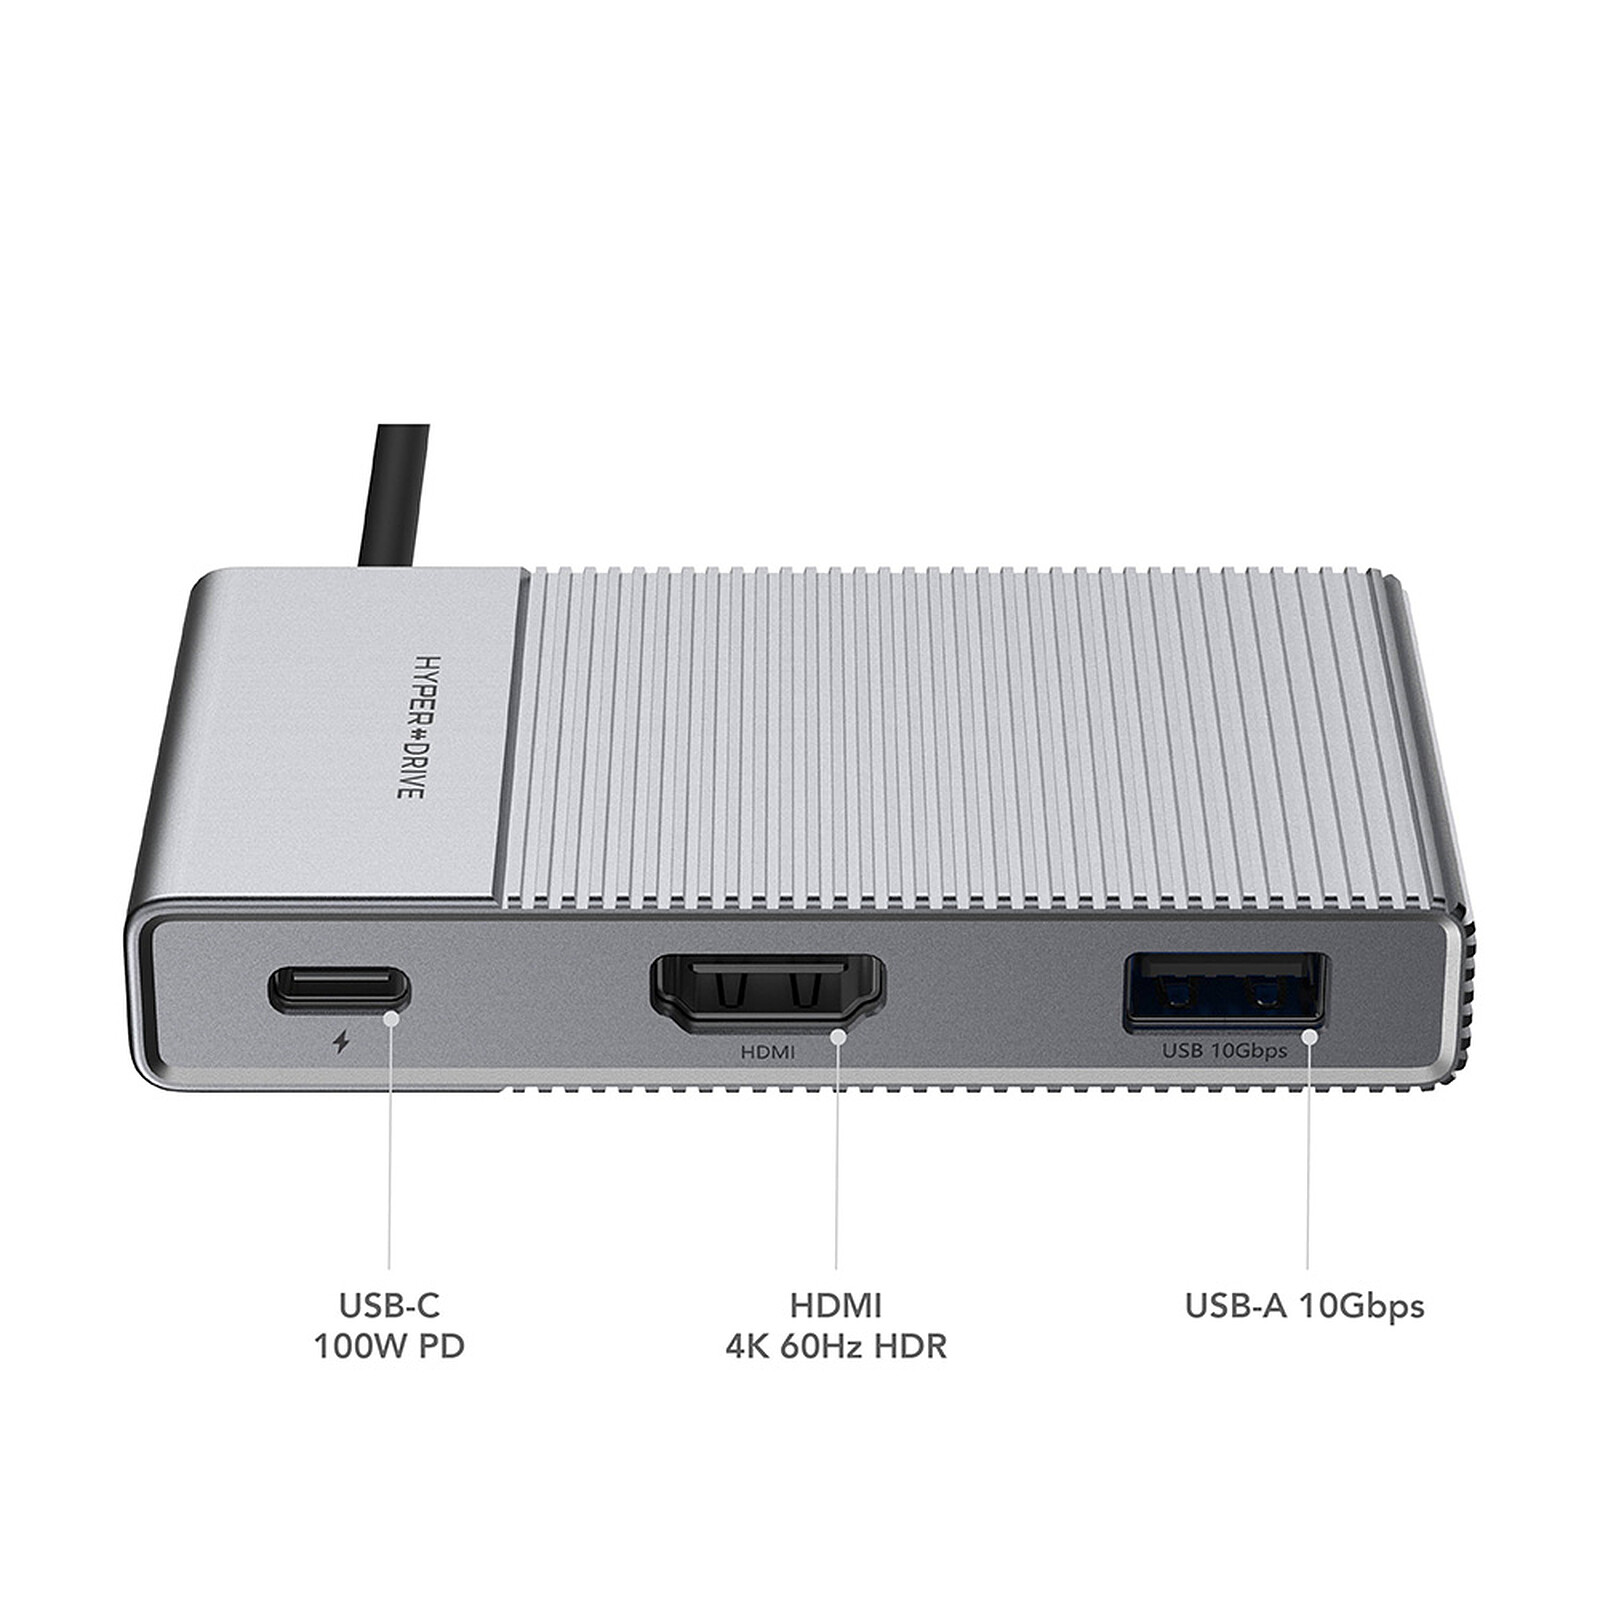 HyperDrive GEN2 12-in-1 USB-C Docking Station